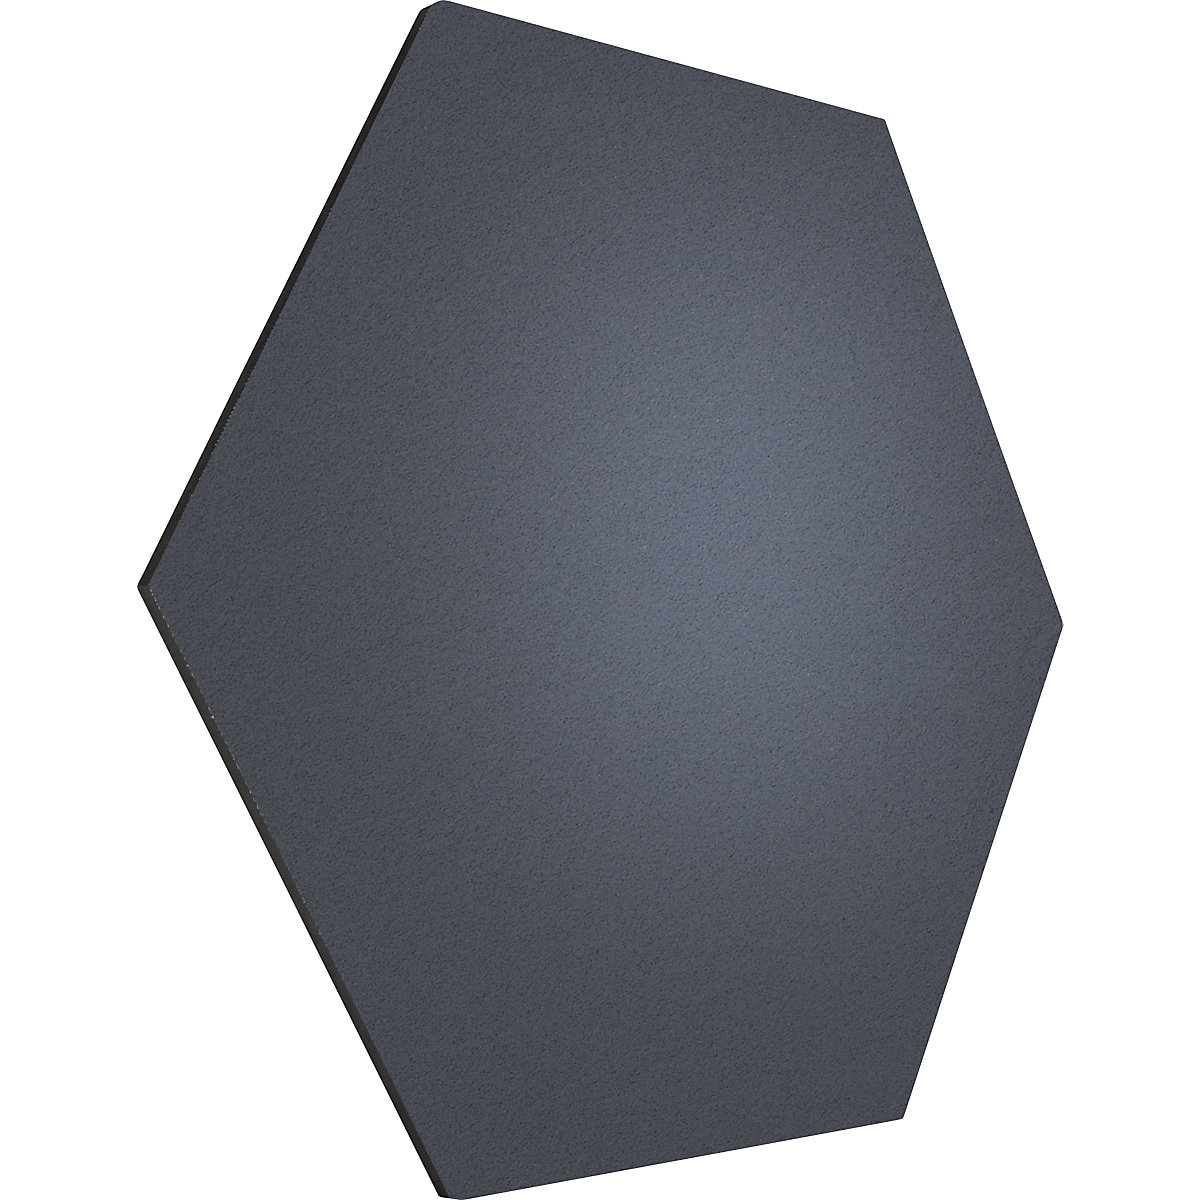 Hexagonal designer pin board – Chameleon, cork, WxH 600 x 600 mm, charcoal-38